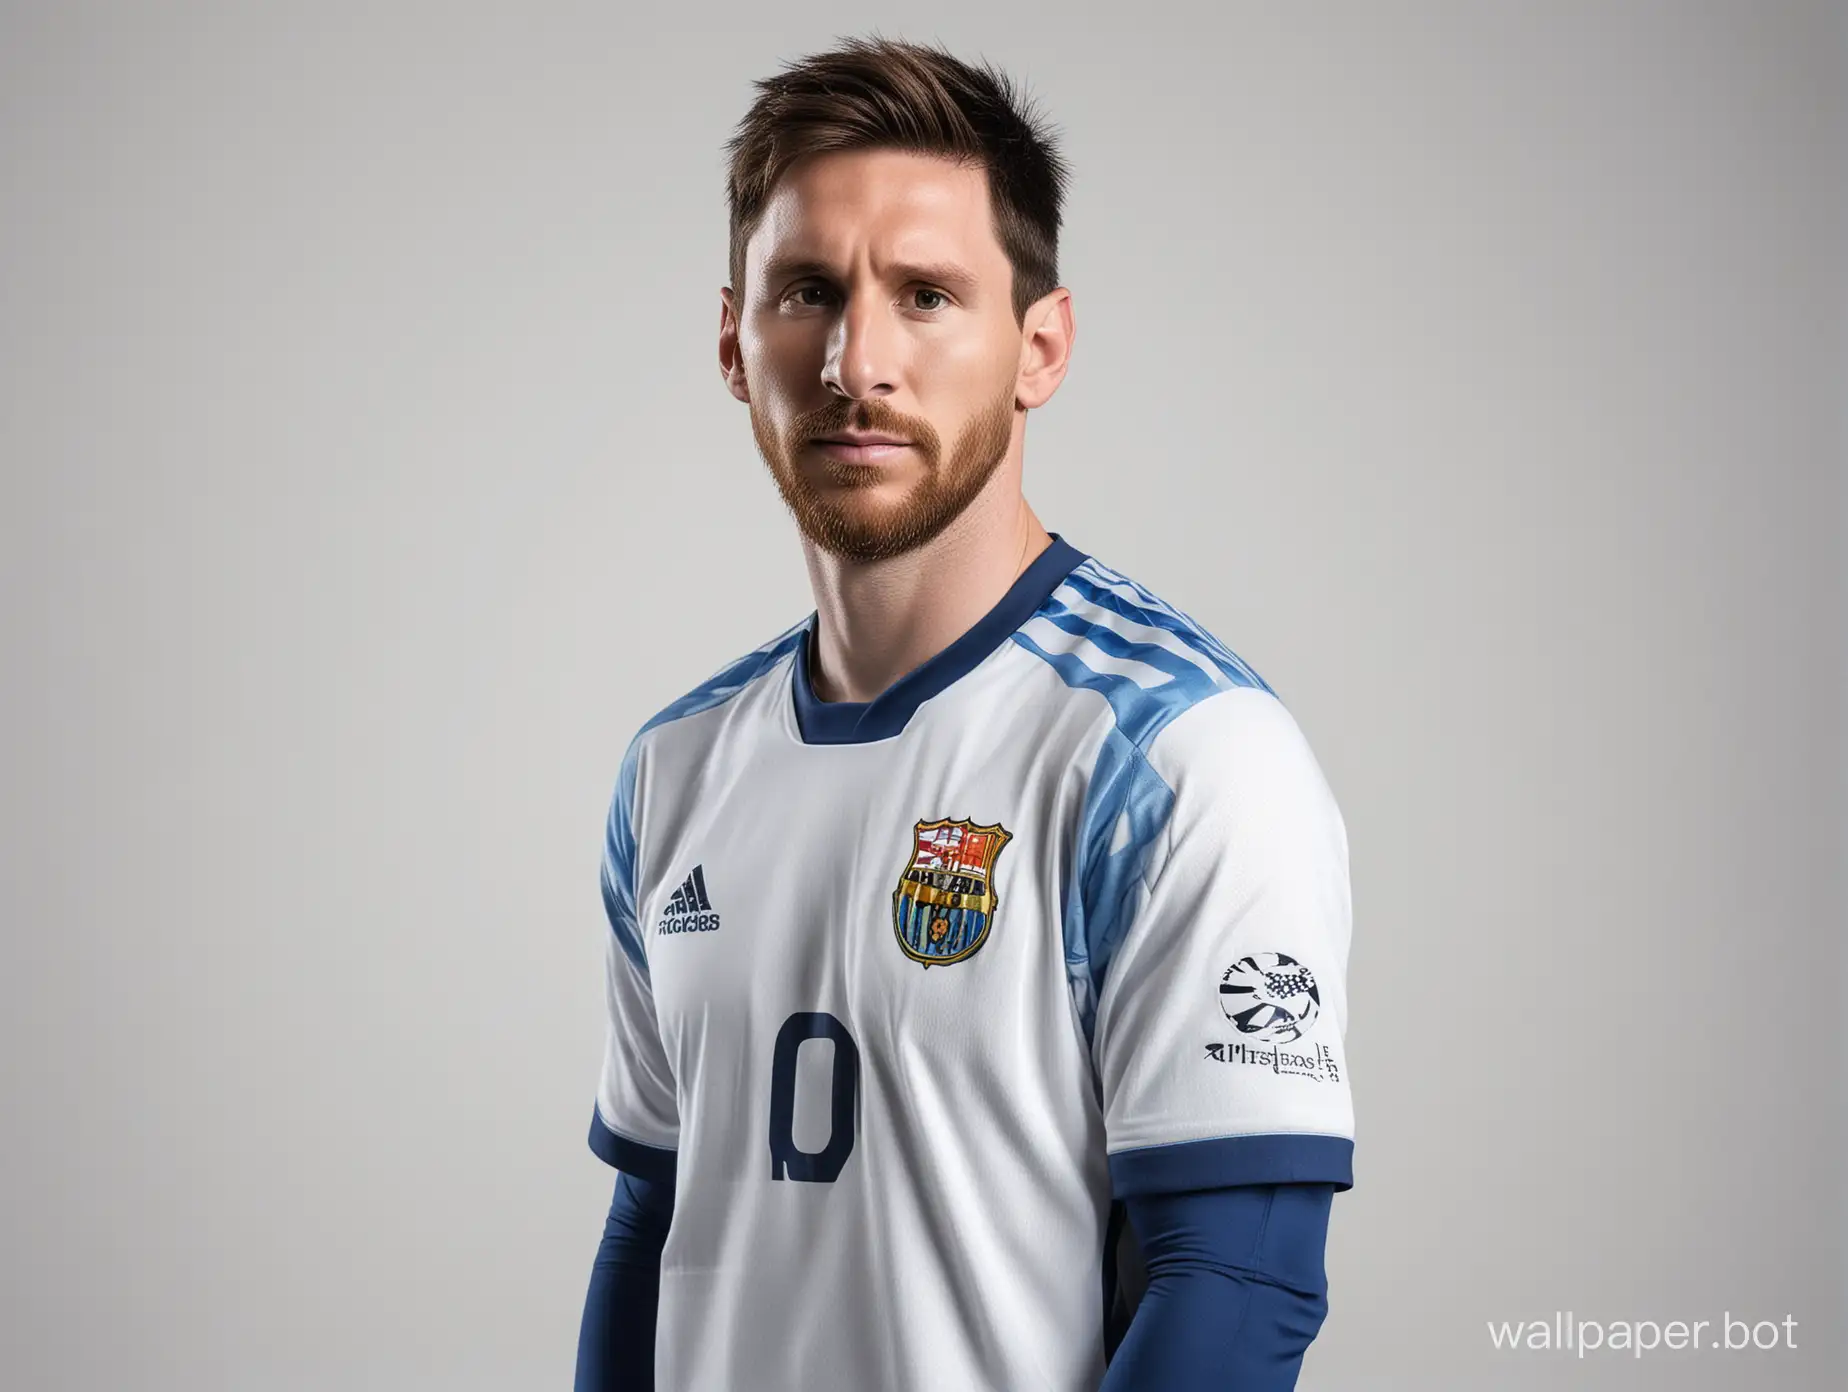 Soccer Lionel Messi 30 years in white and blue uniform portrait studio photo in half-turn white background photo 16K